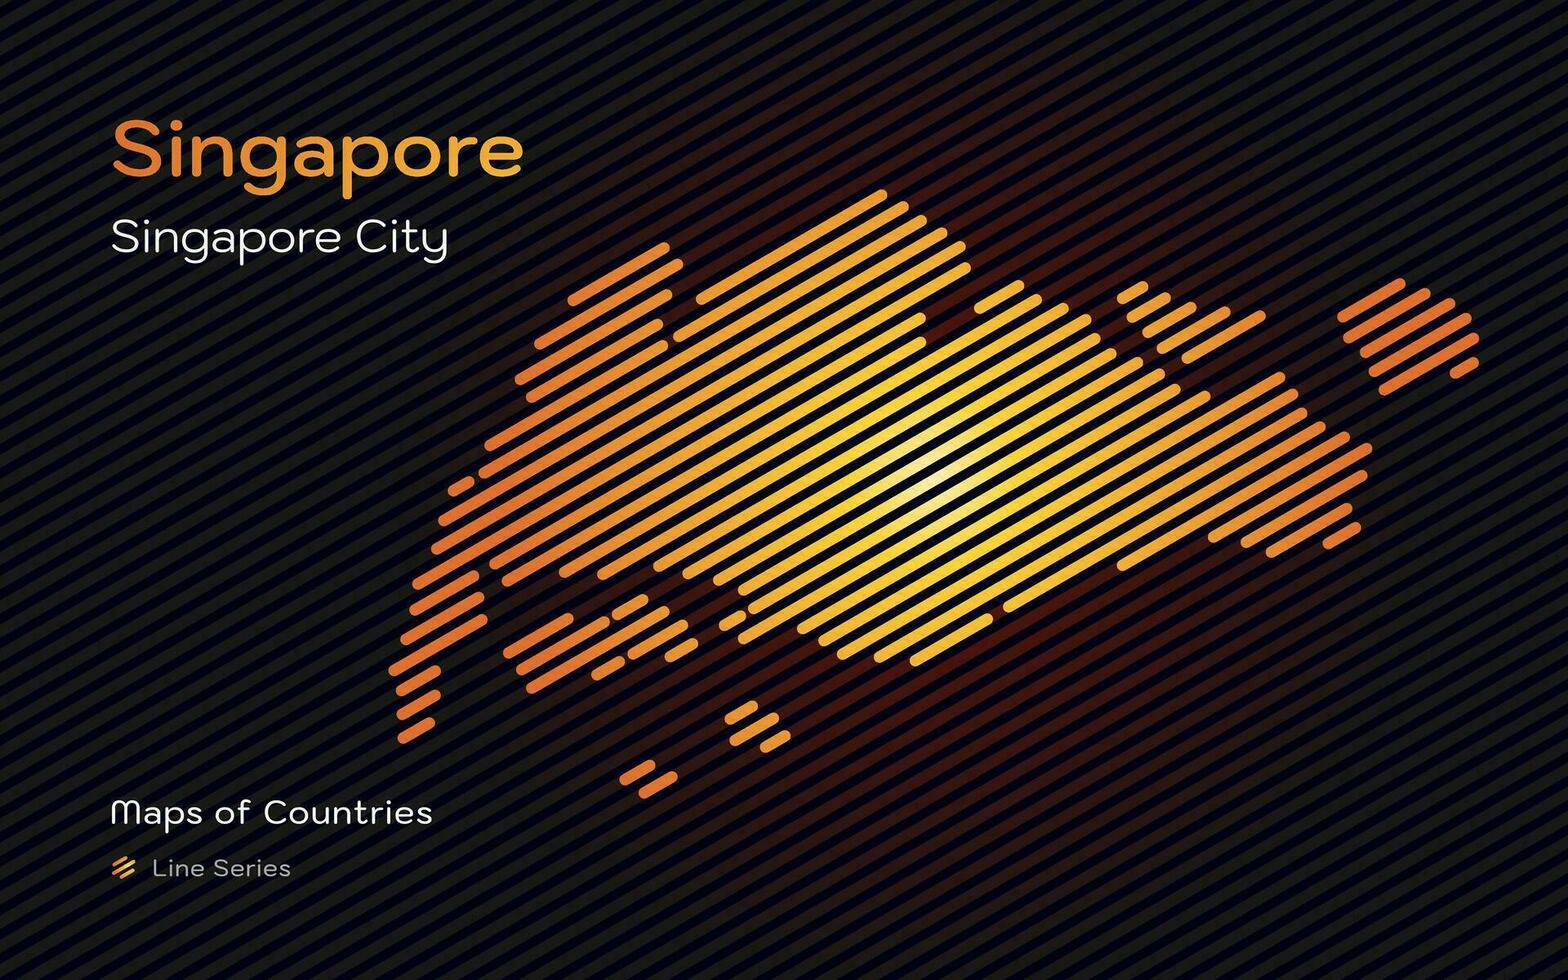 Singapur oro mapa mostrado en un línea modelo. estilizado sencillo vector mapa